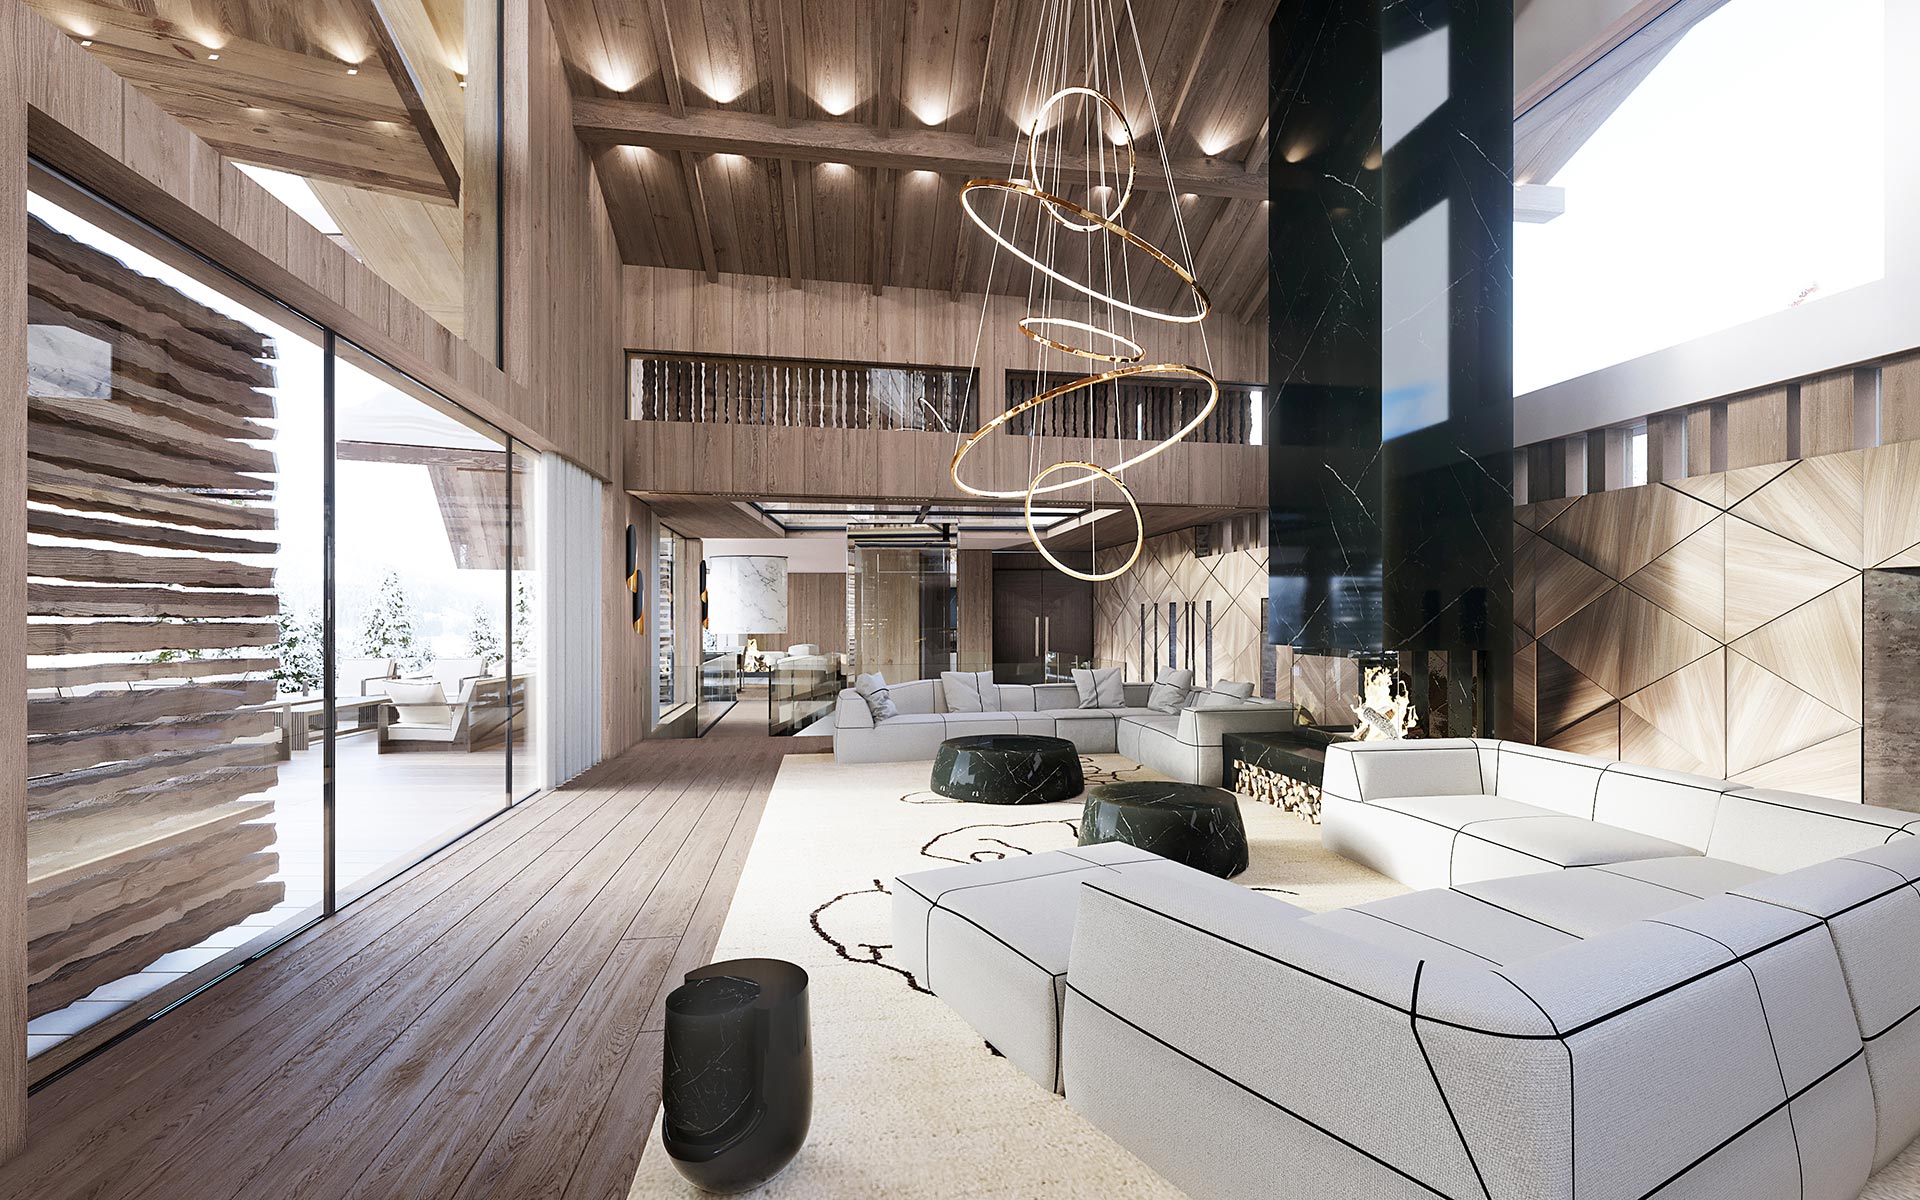 3D render of a luxurious chalet interior